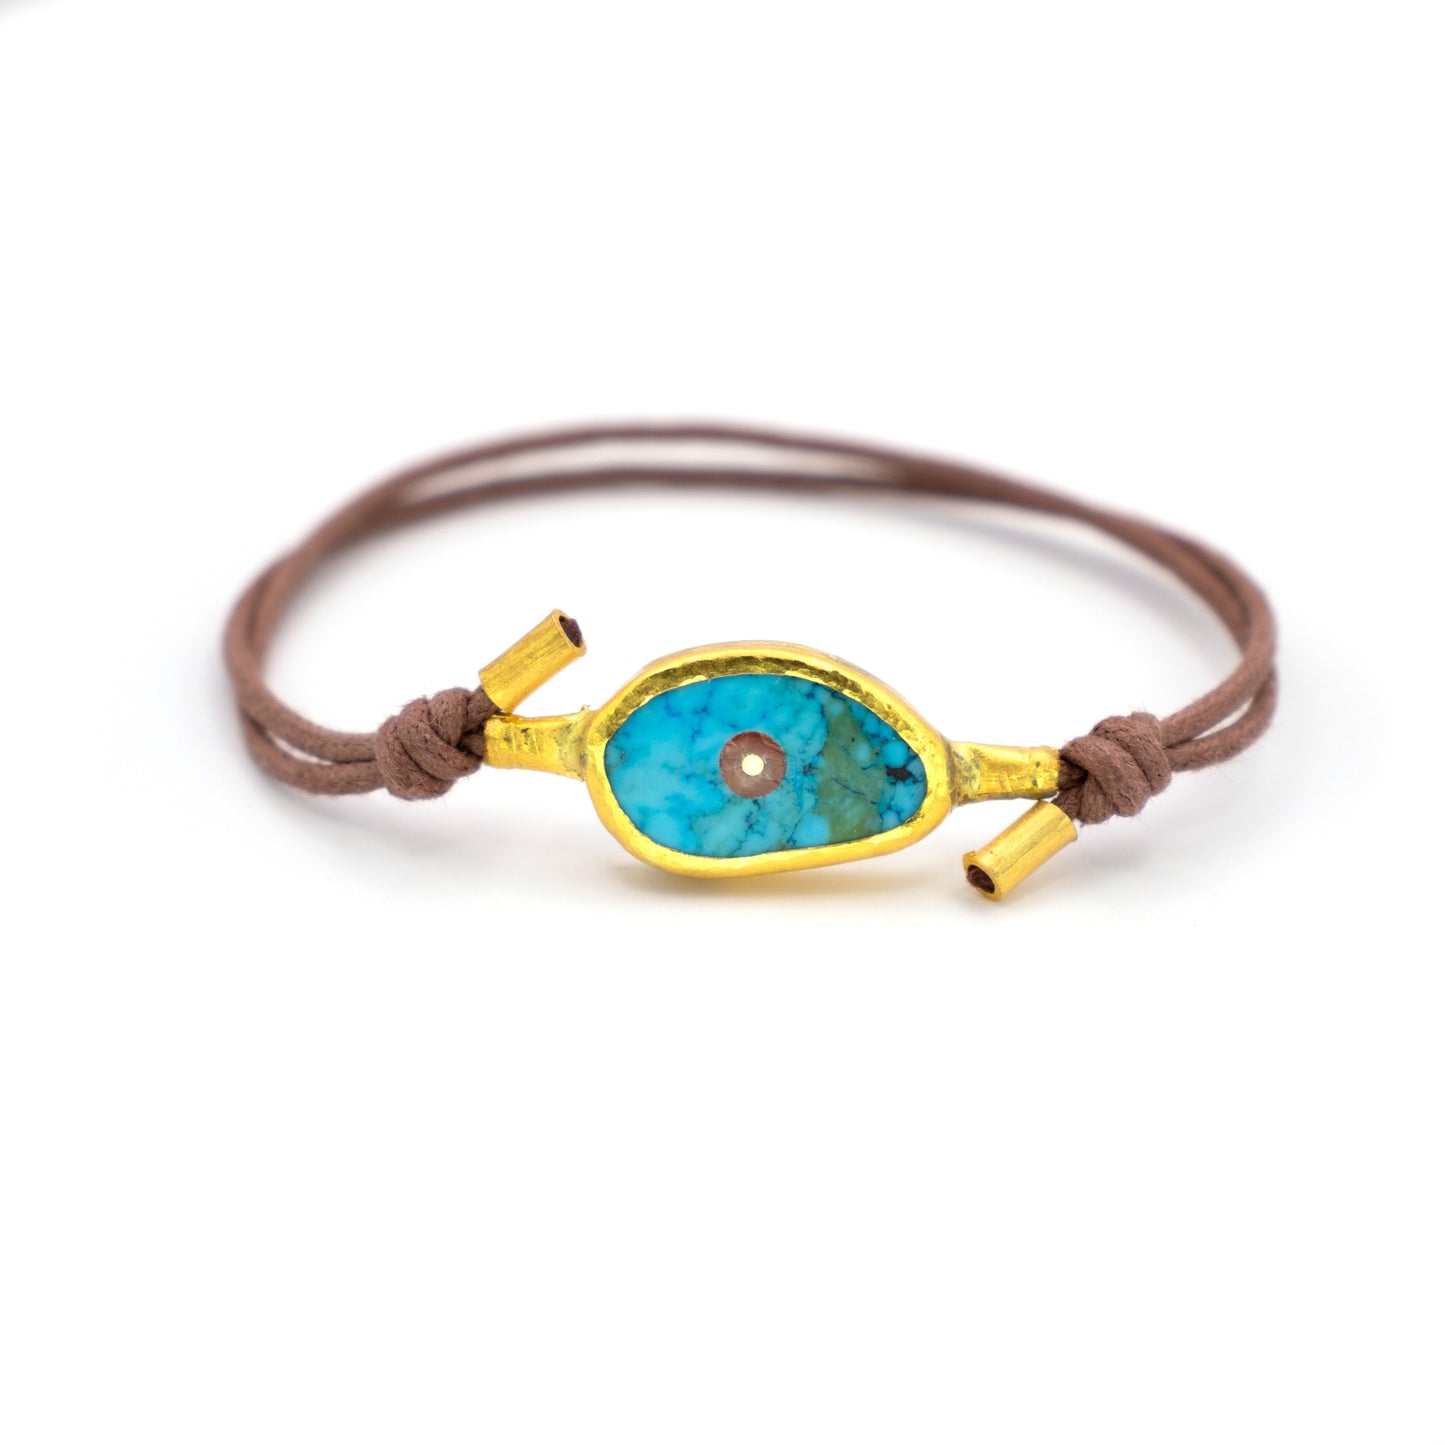 Turquoise Charm Bracelet - Geometric